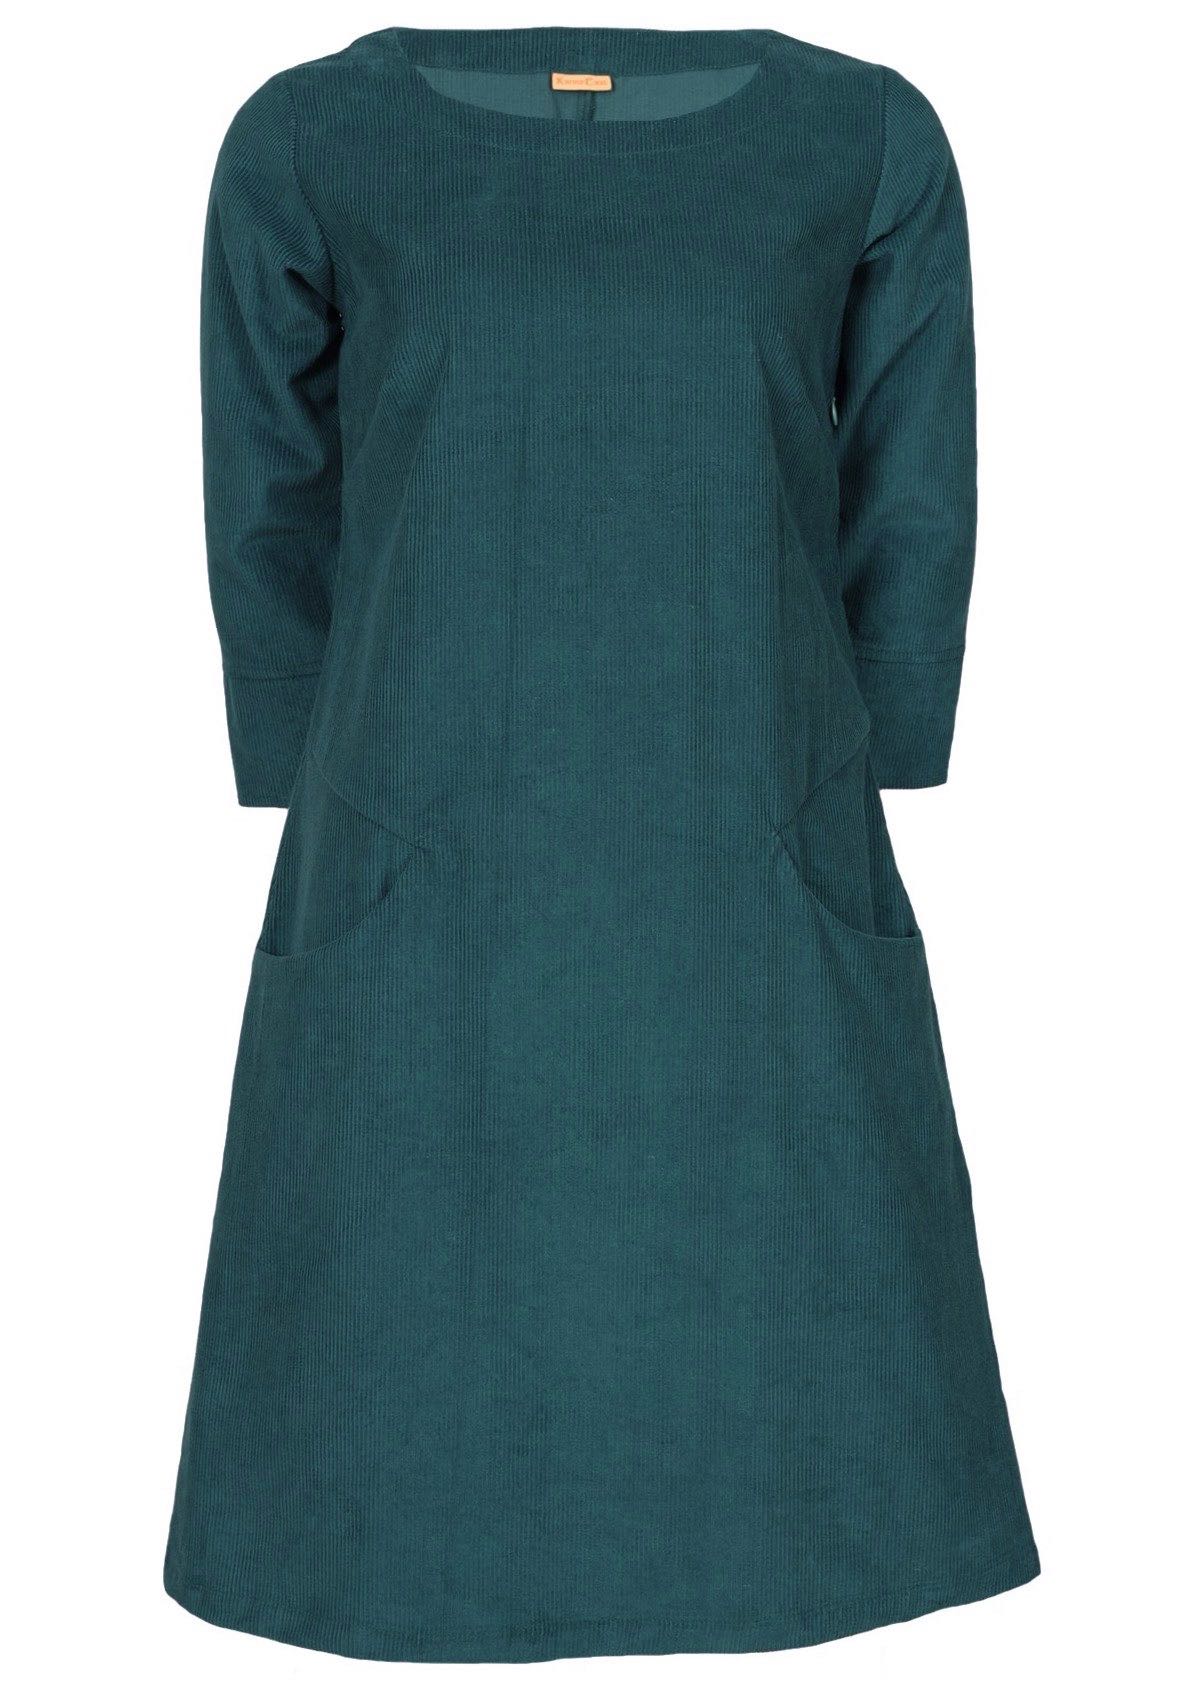 100% cotton corduroy dress has an a-line shape. 